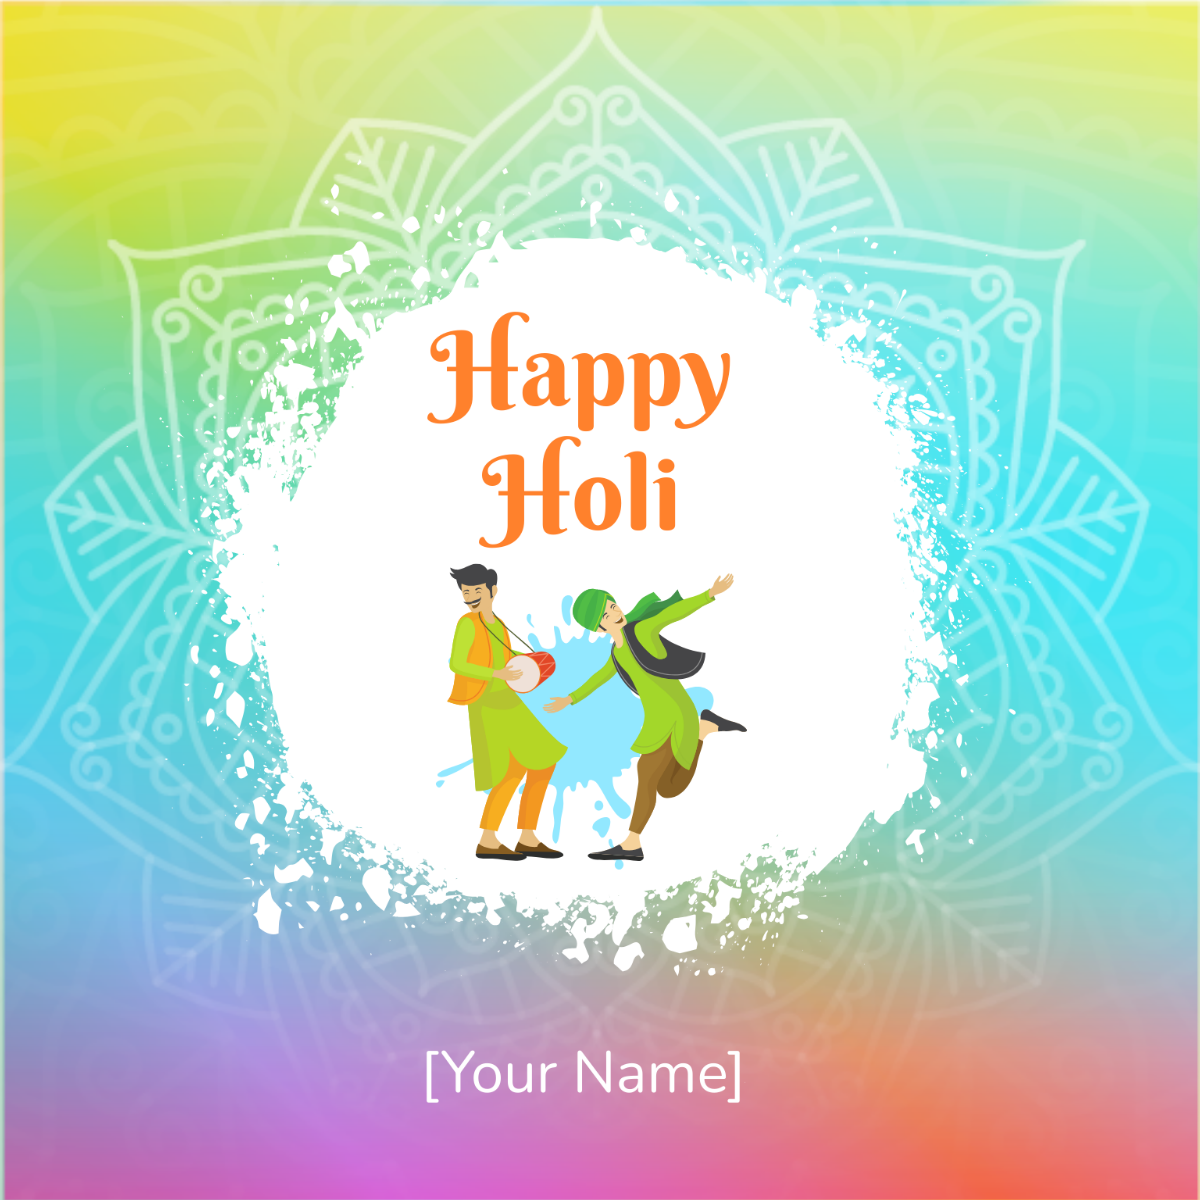 Simple Happy Holi GIF Template